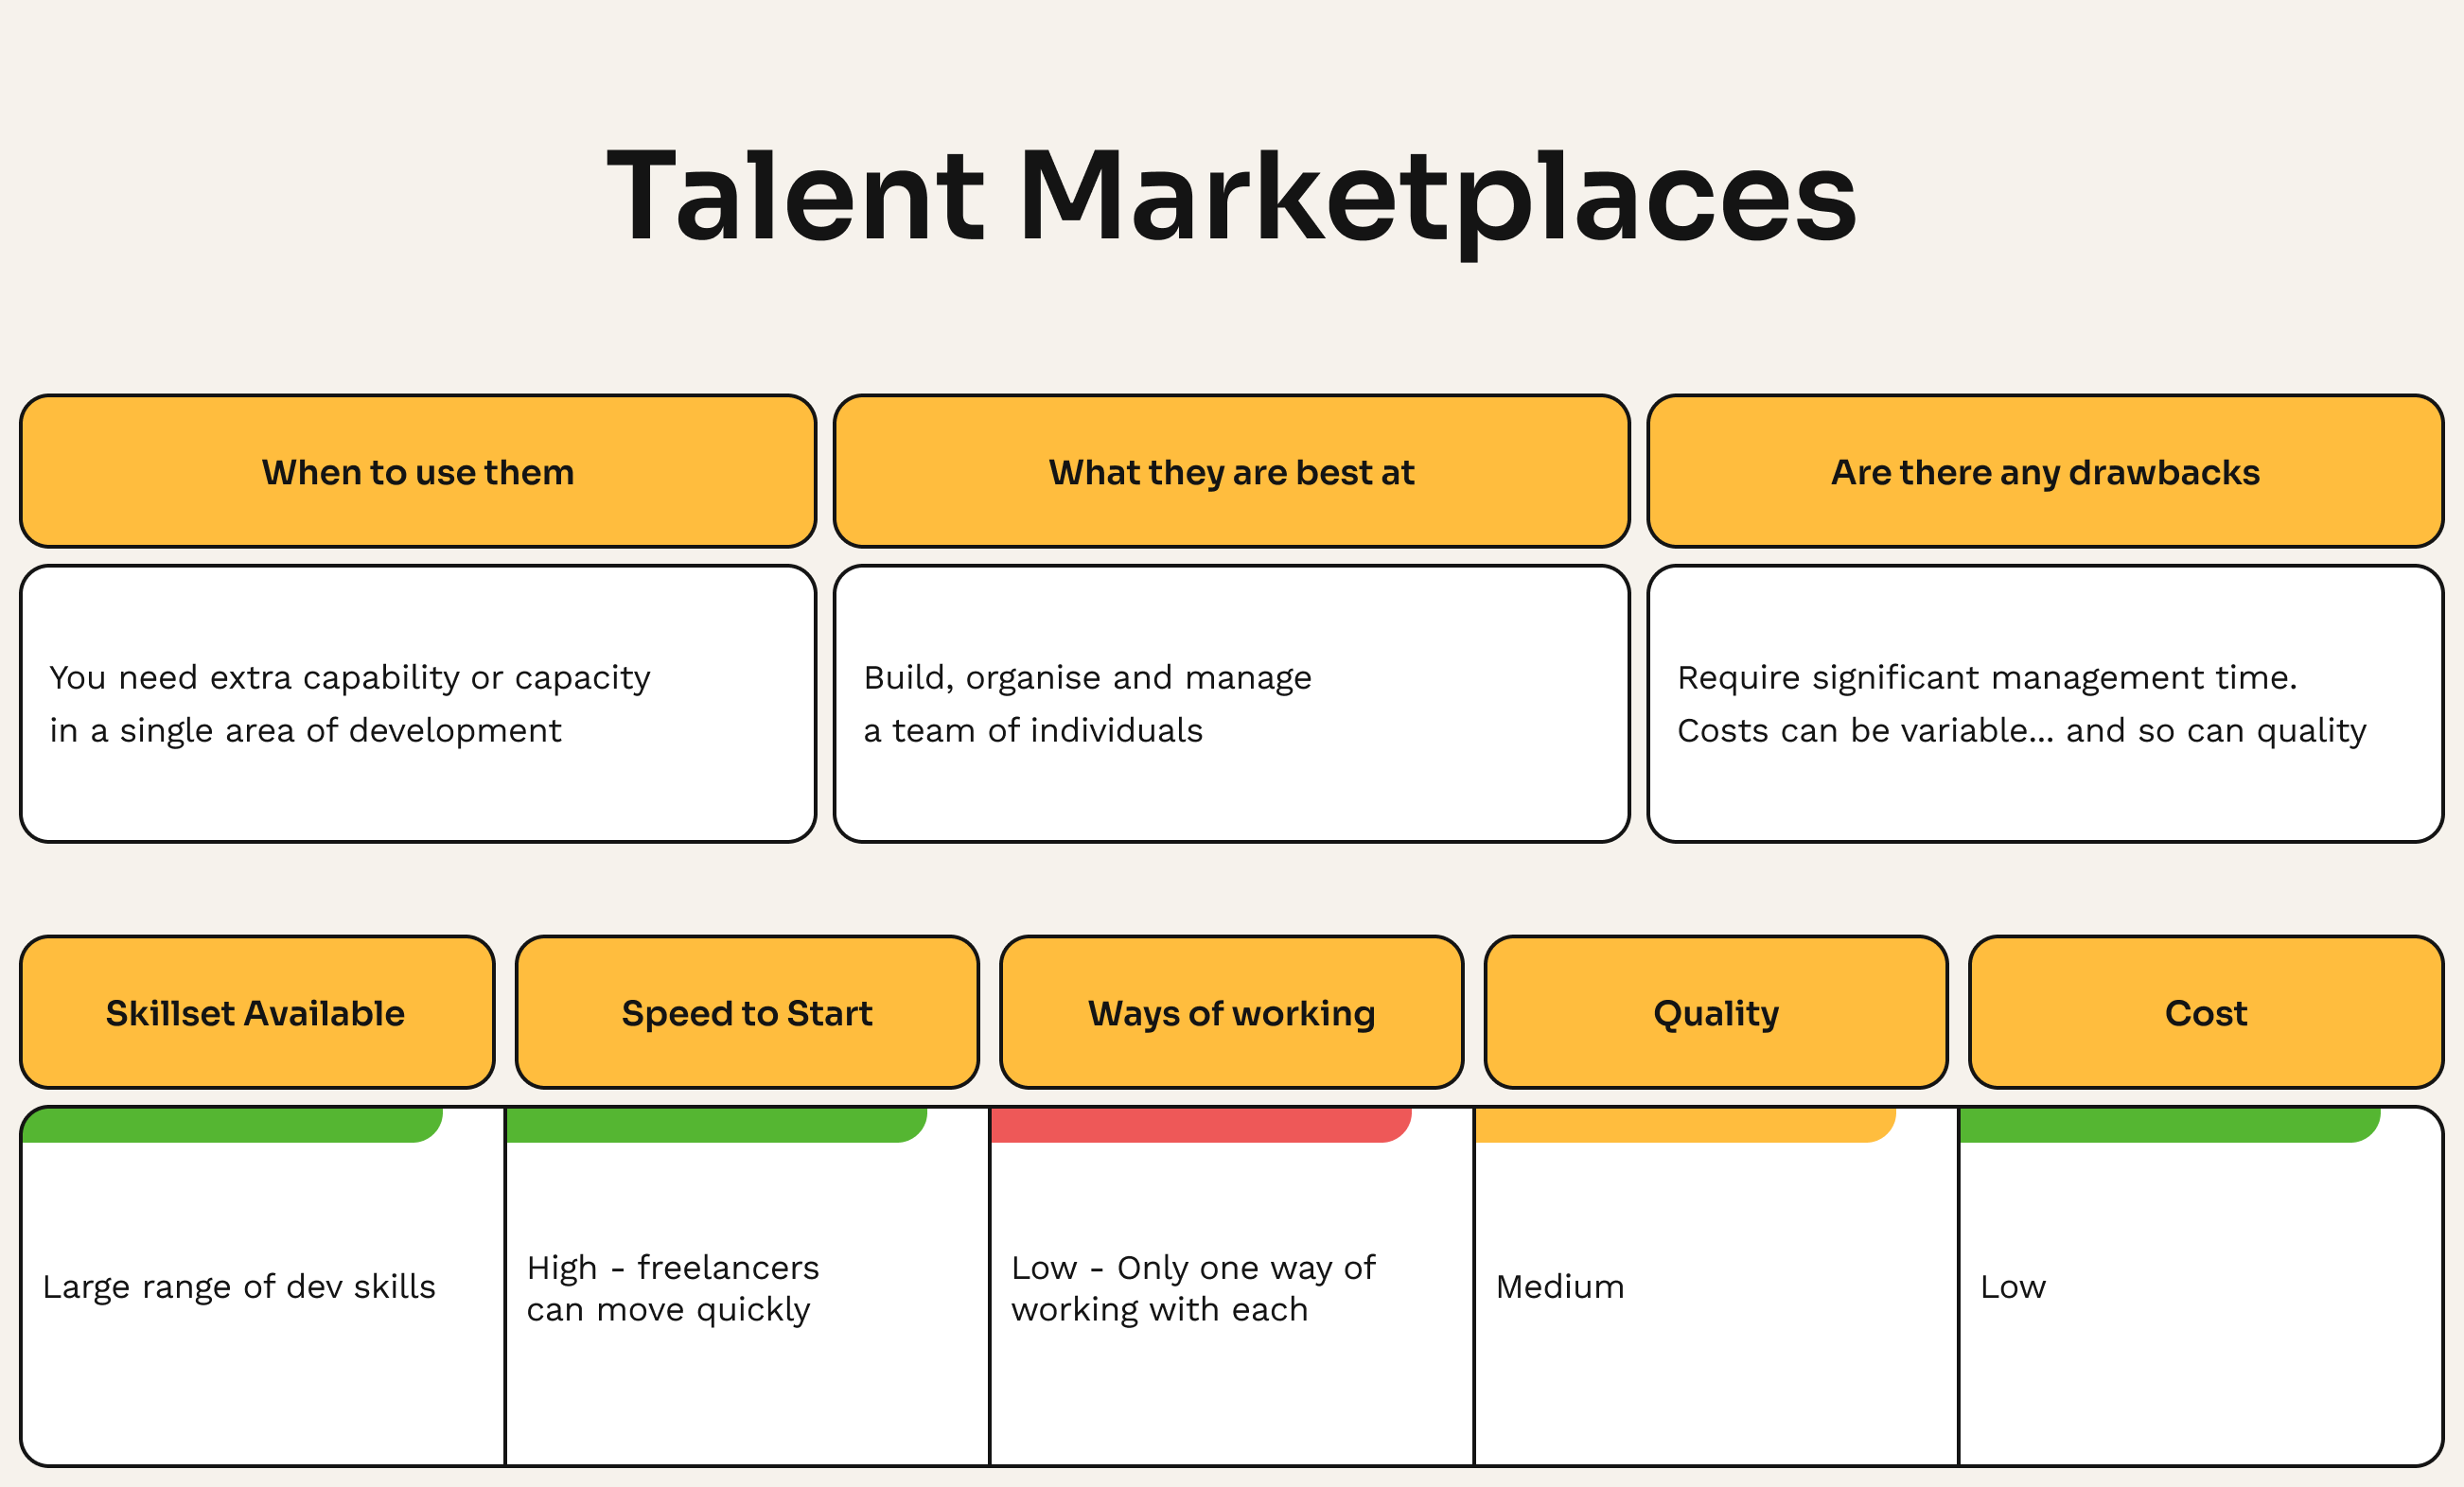 Talent Marketplaces